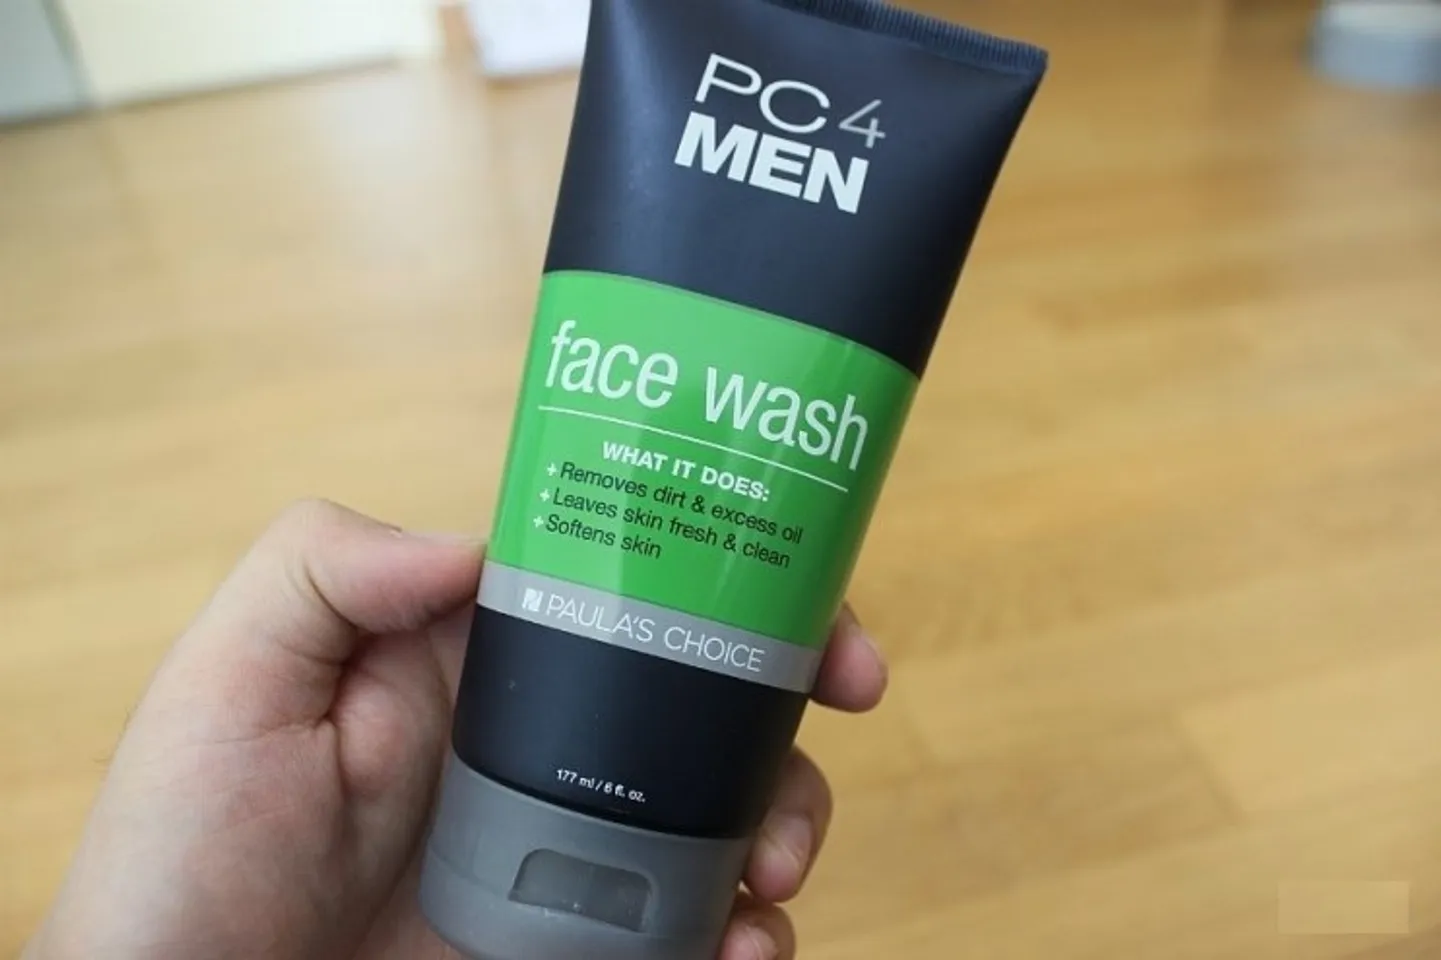 Sữa rửa mặt cho nam Paula's Choice PC4MEN Face Wash